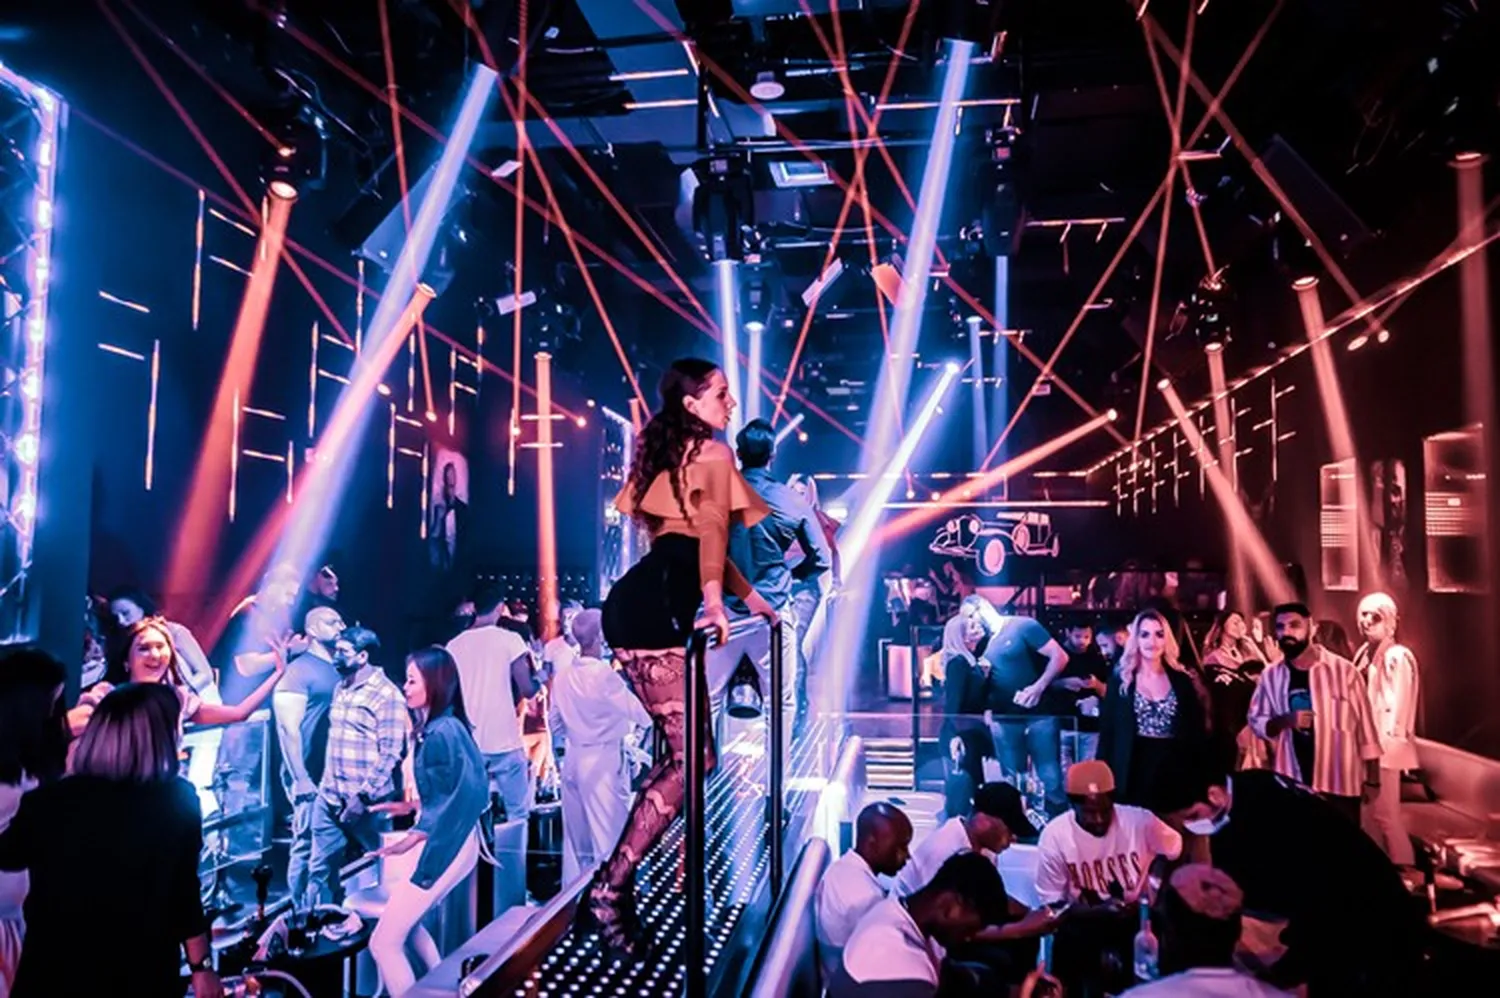 Mafia nightclub Dubai